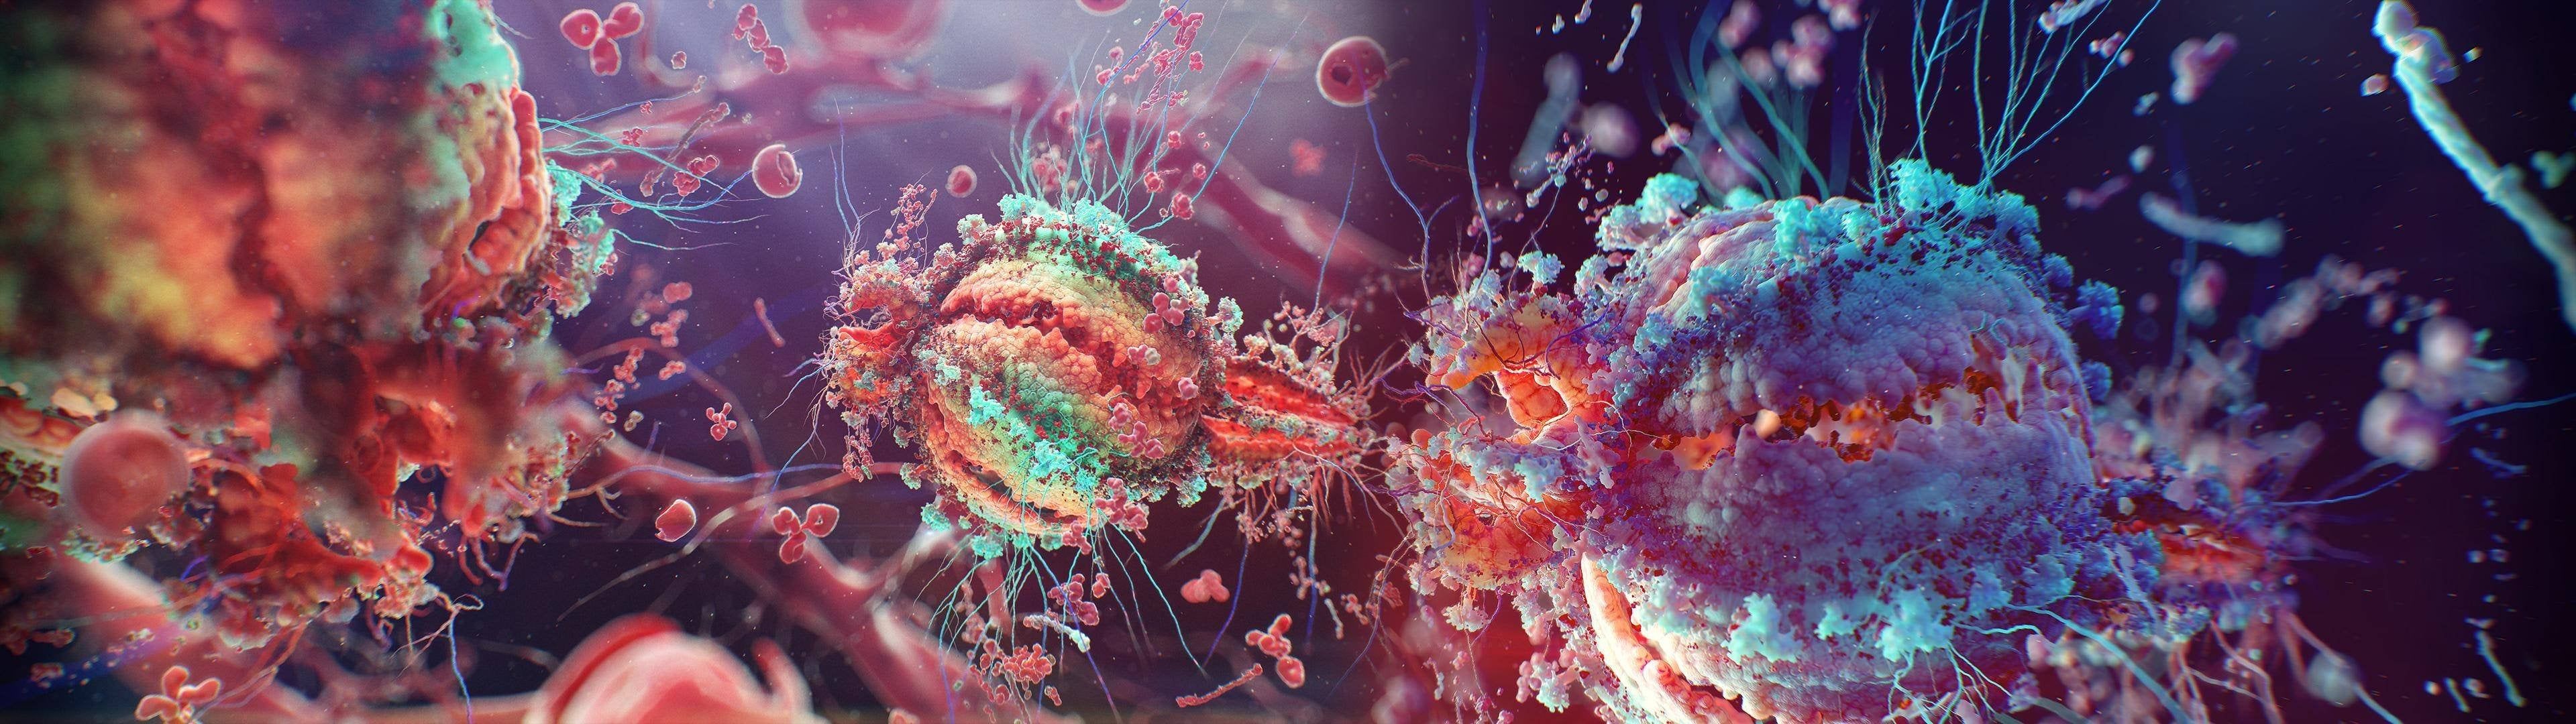 Human Immunodeficiency Virus (H.I.V) By Alexey Kashpersky (x Post